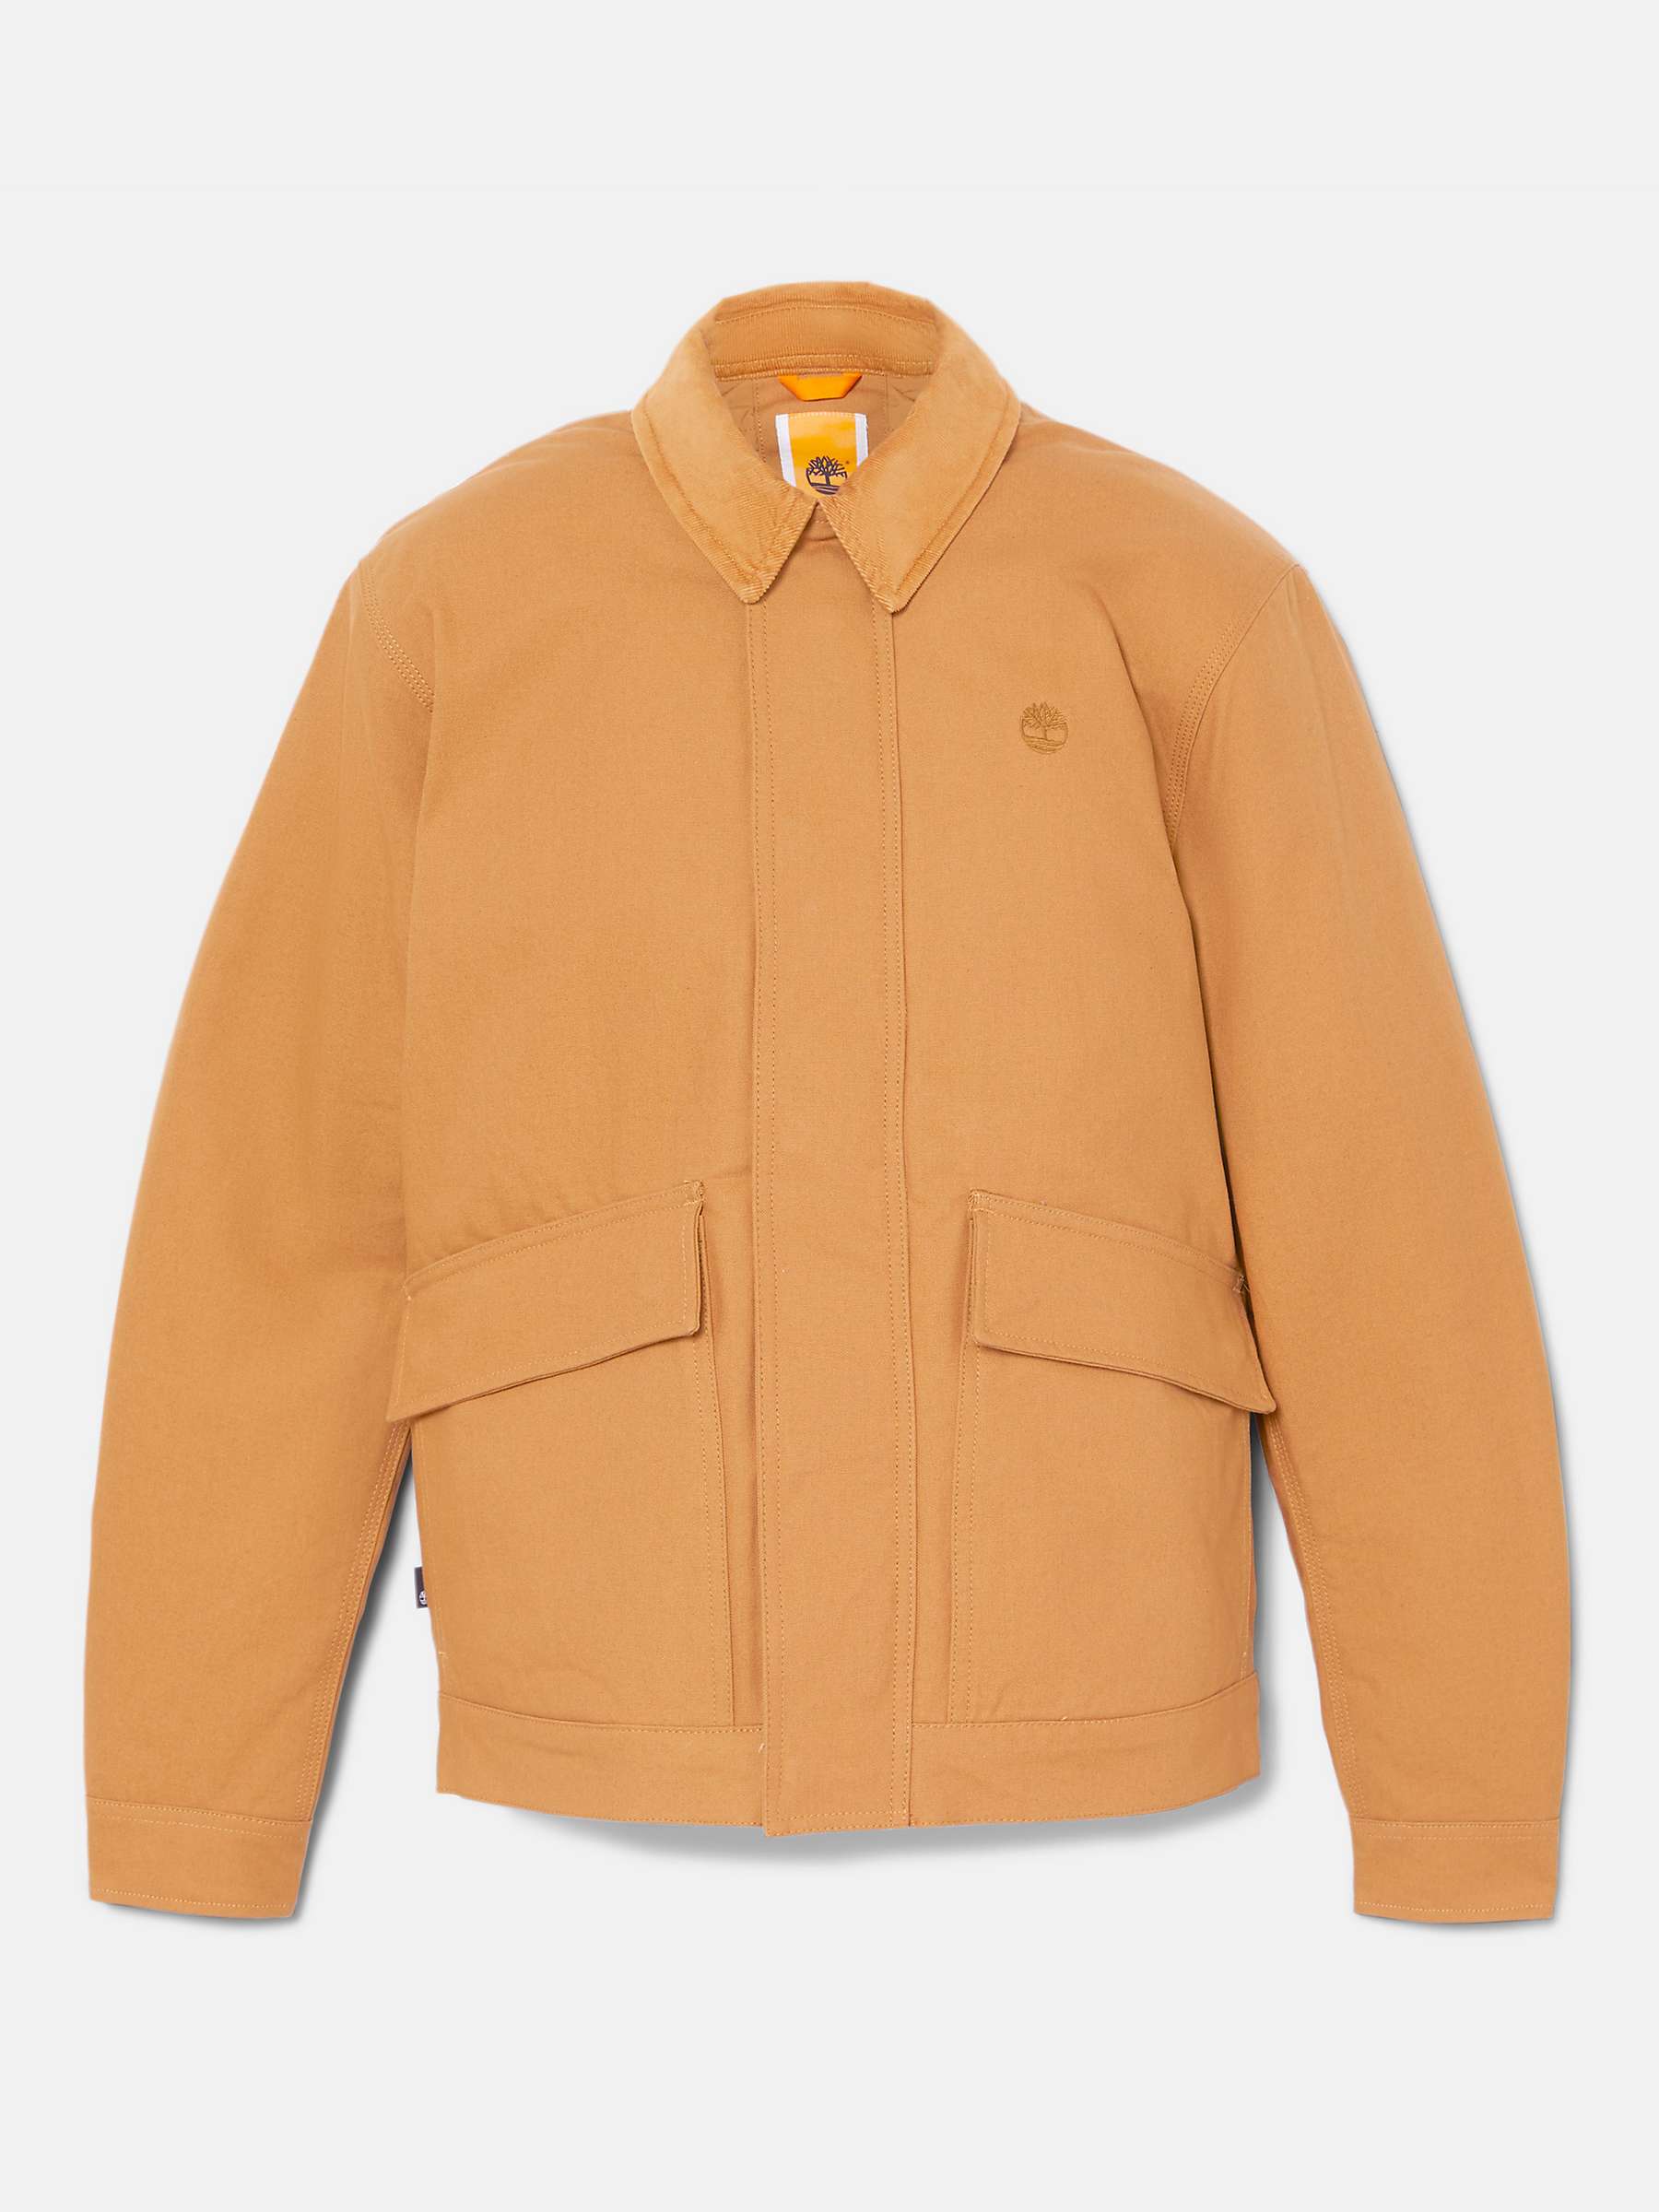 Buy Timberland Strafford Work Wear Jacket, Light Brown Online at johnlewis.com